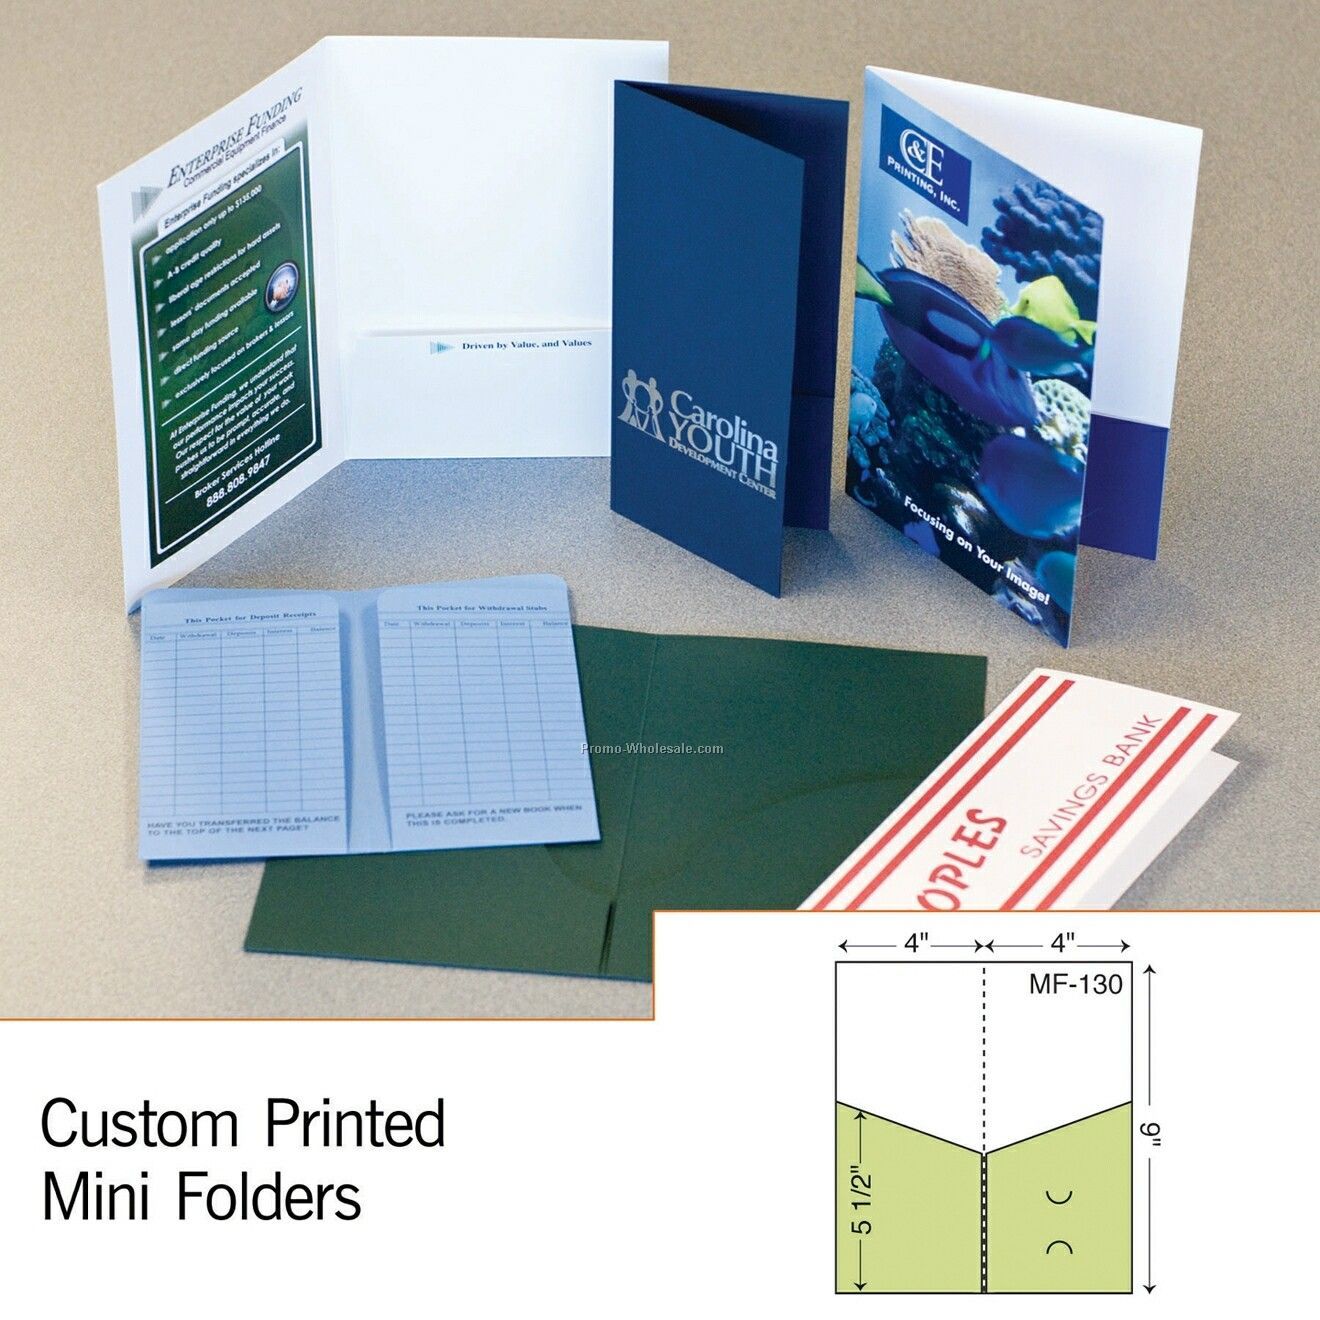 4"x9" Mini Folder W/ Double Pocket (1 Color)